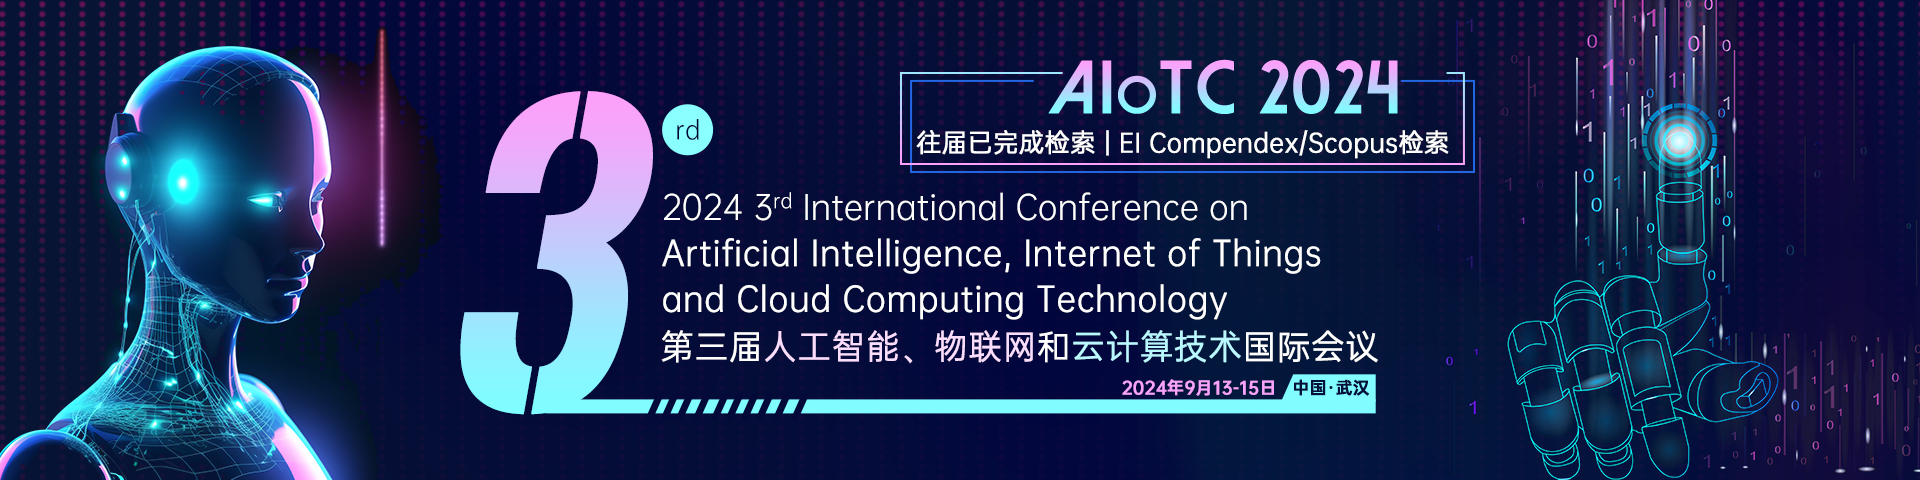 AIoTC 2024 艾思平台.png